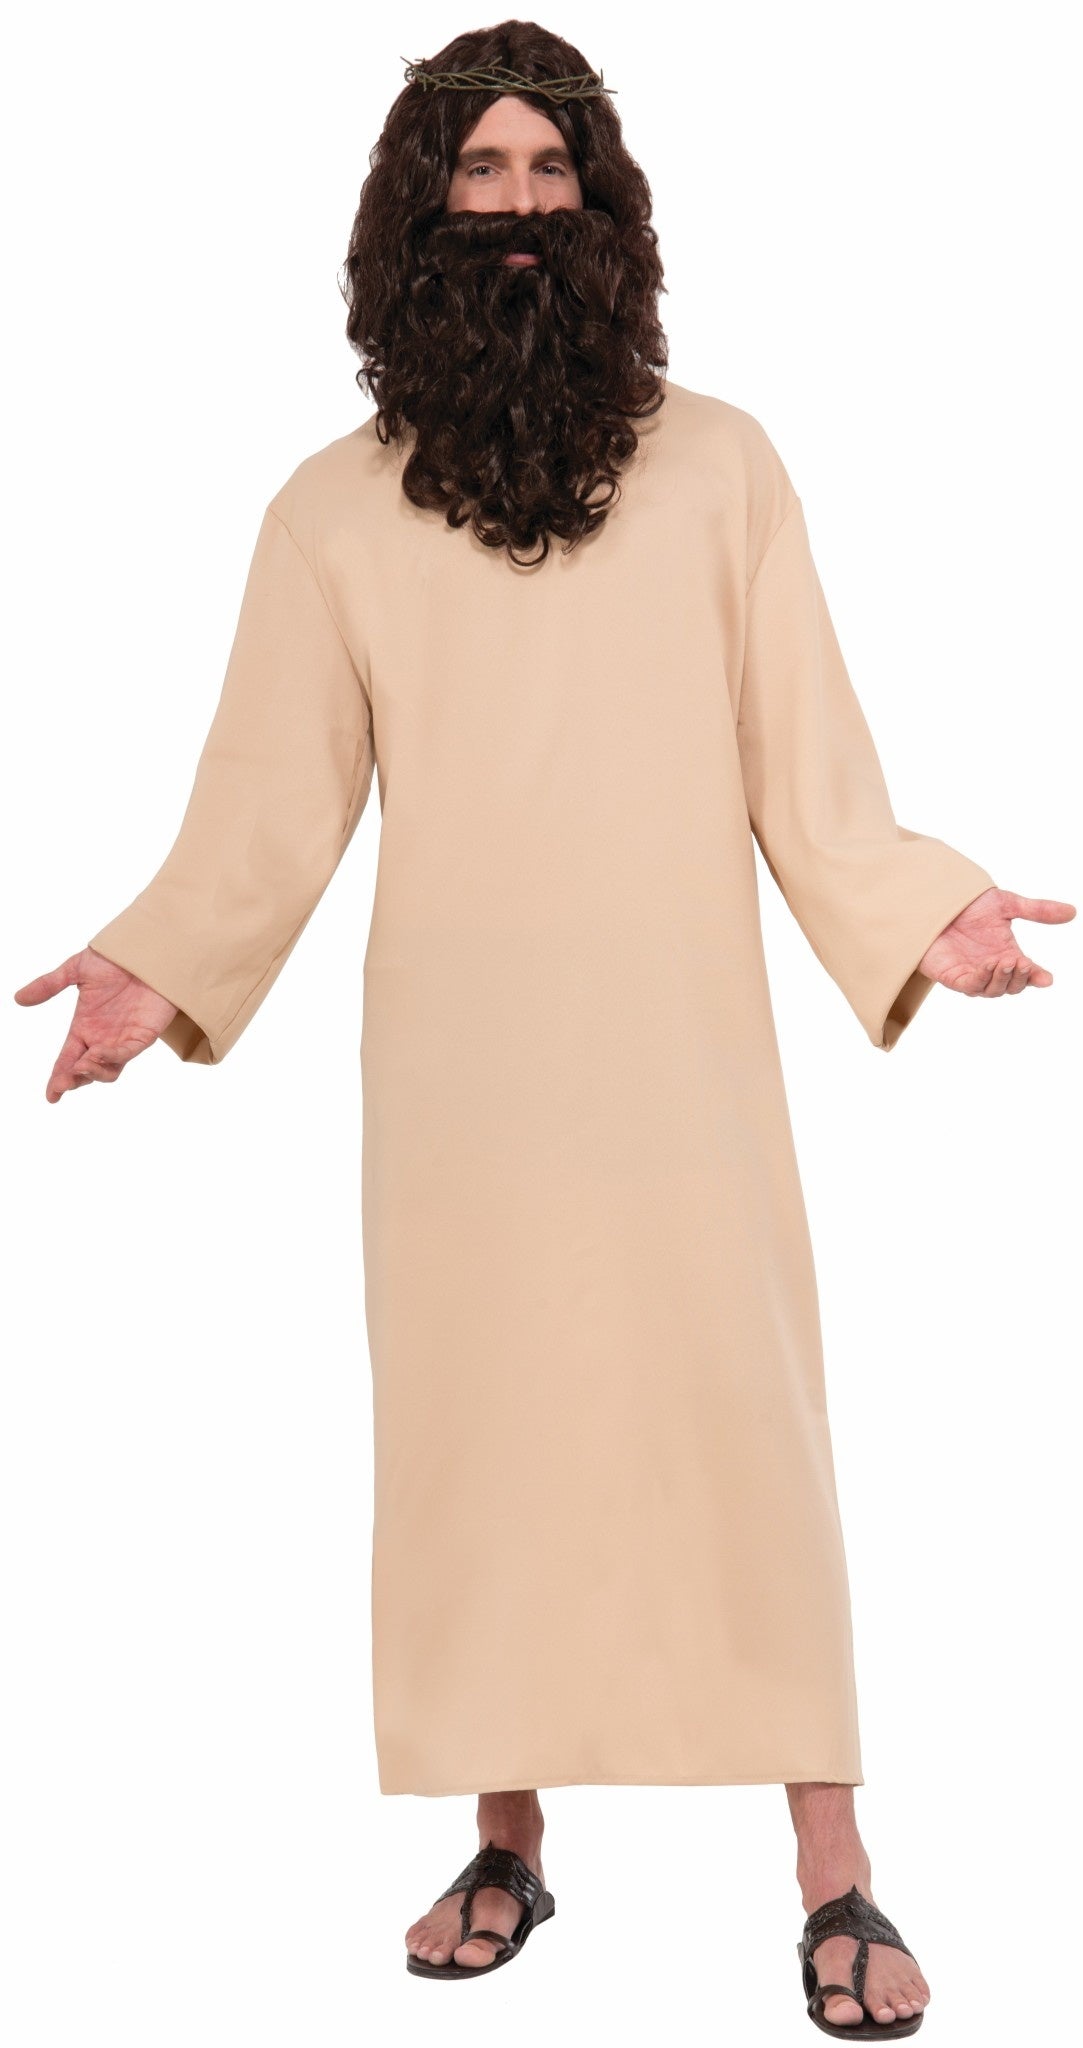 Biblical Robe - Standard Adult Size